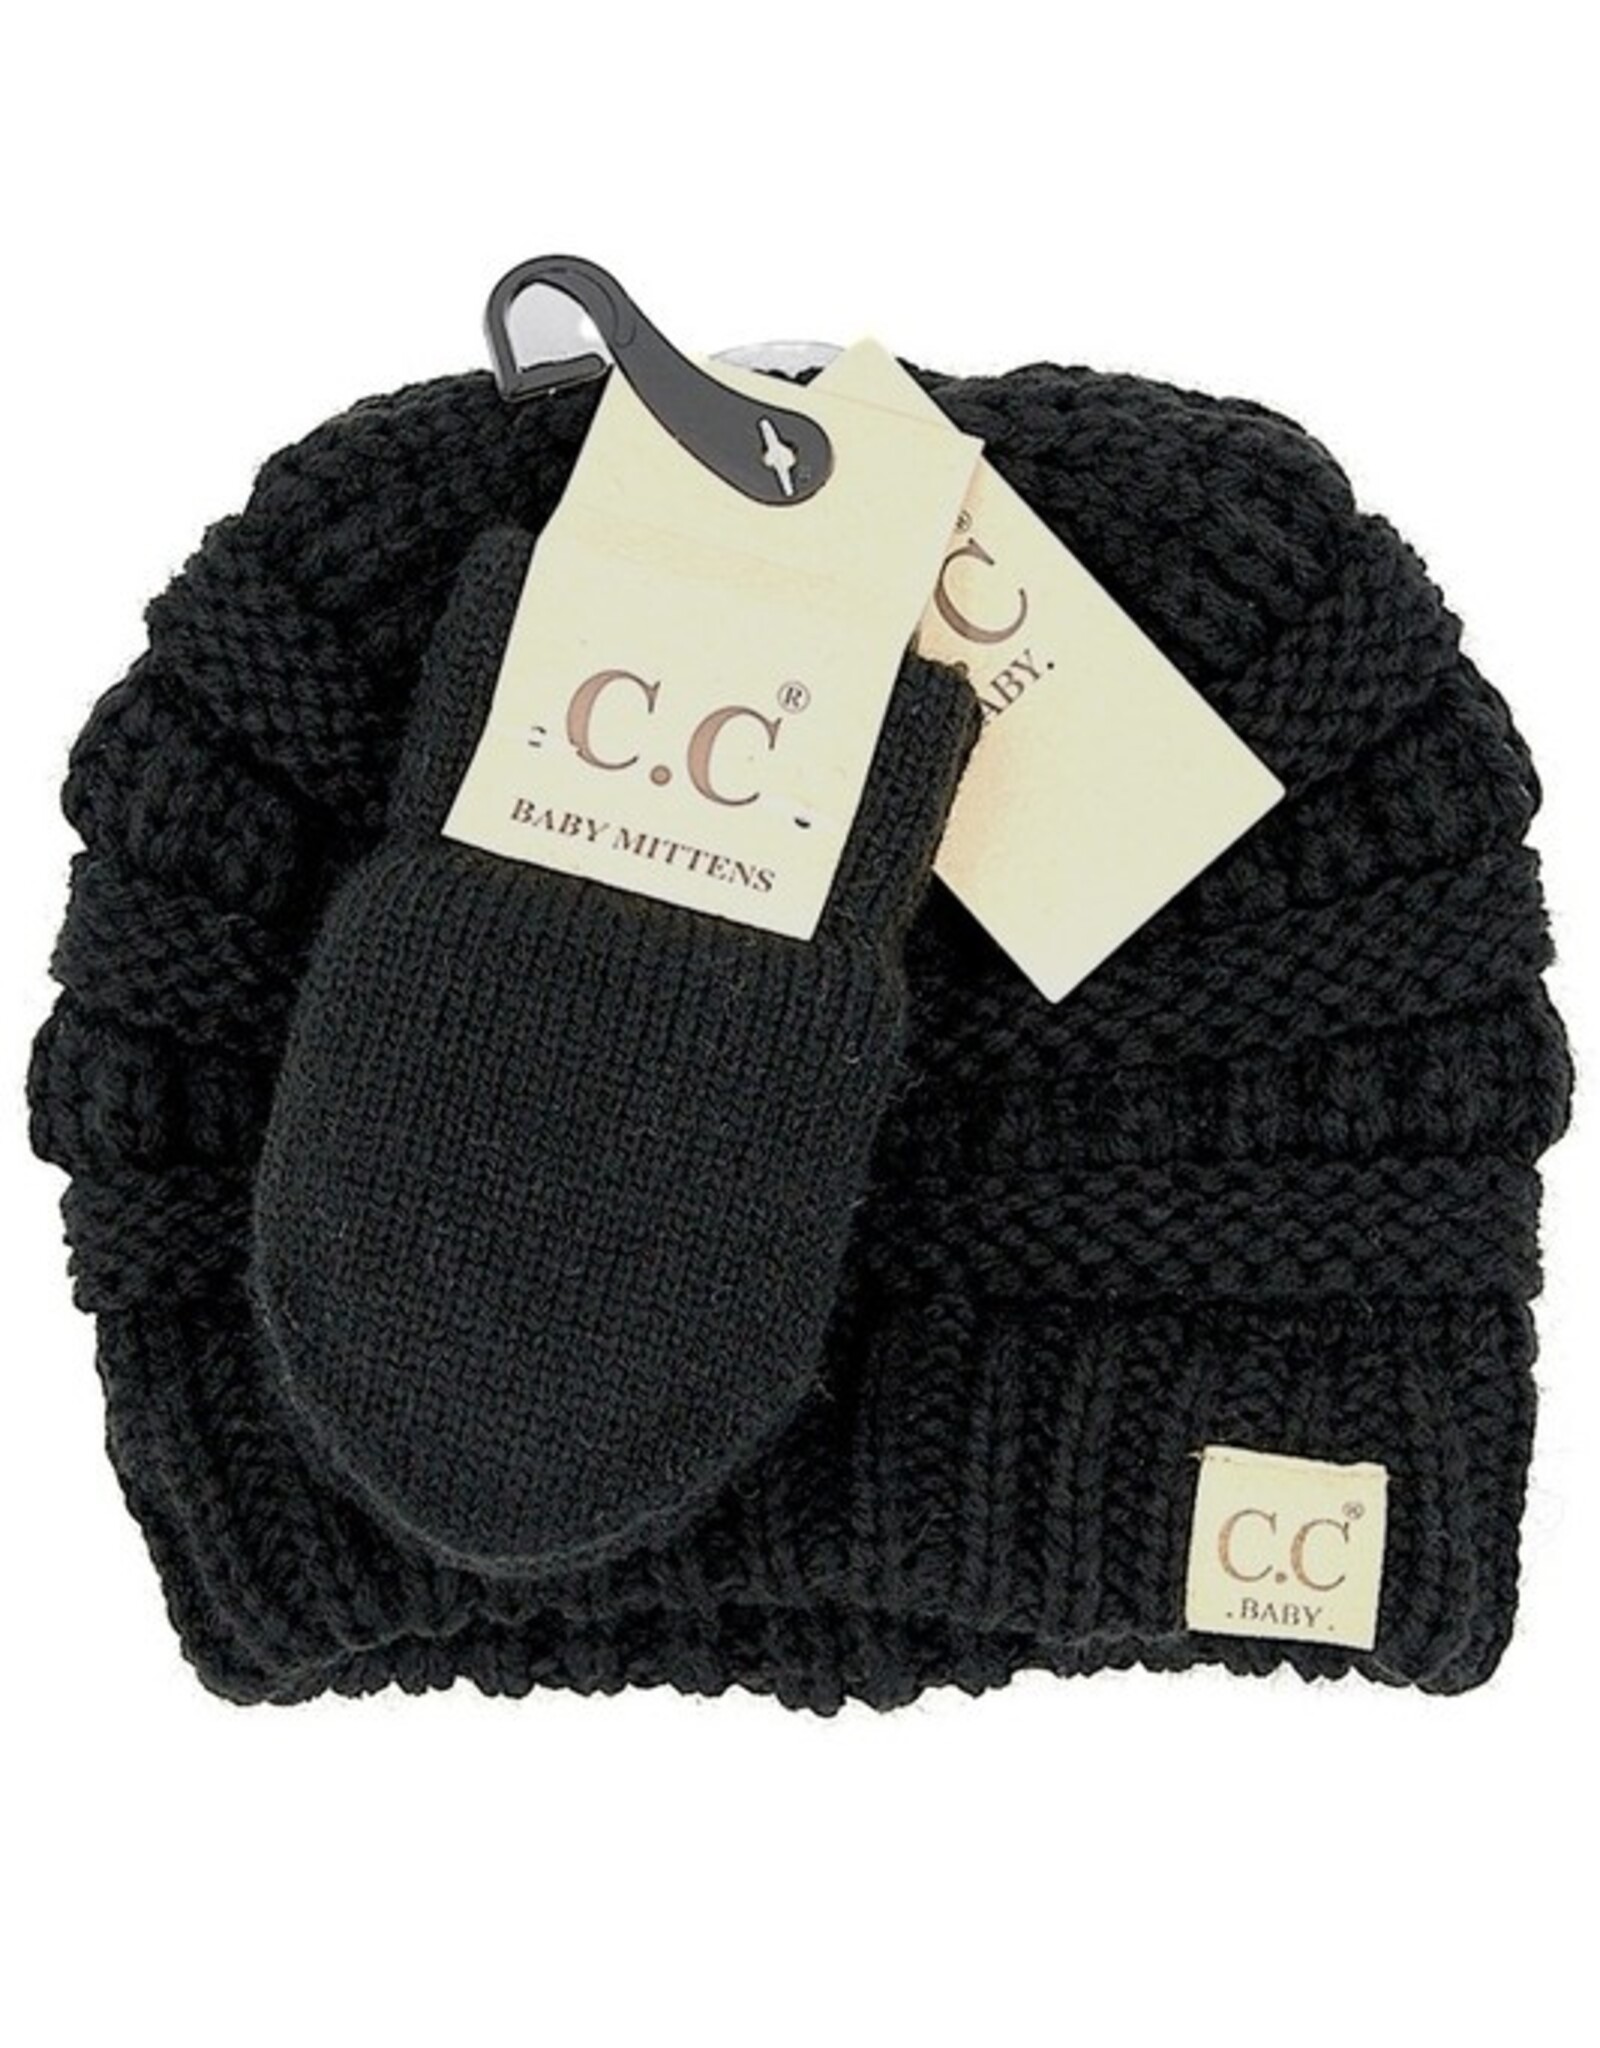 CC CC Baby Set, Knit Beanie & Mittens-Black